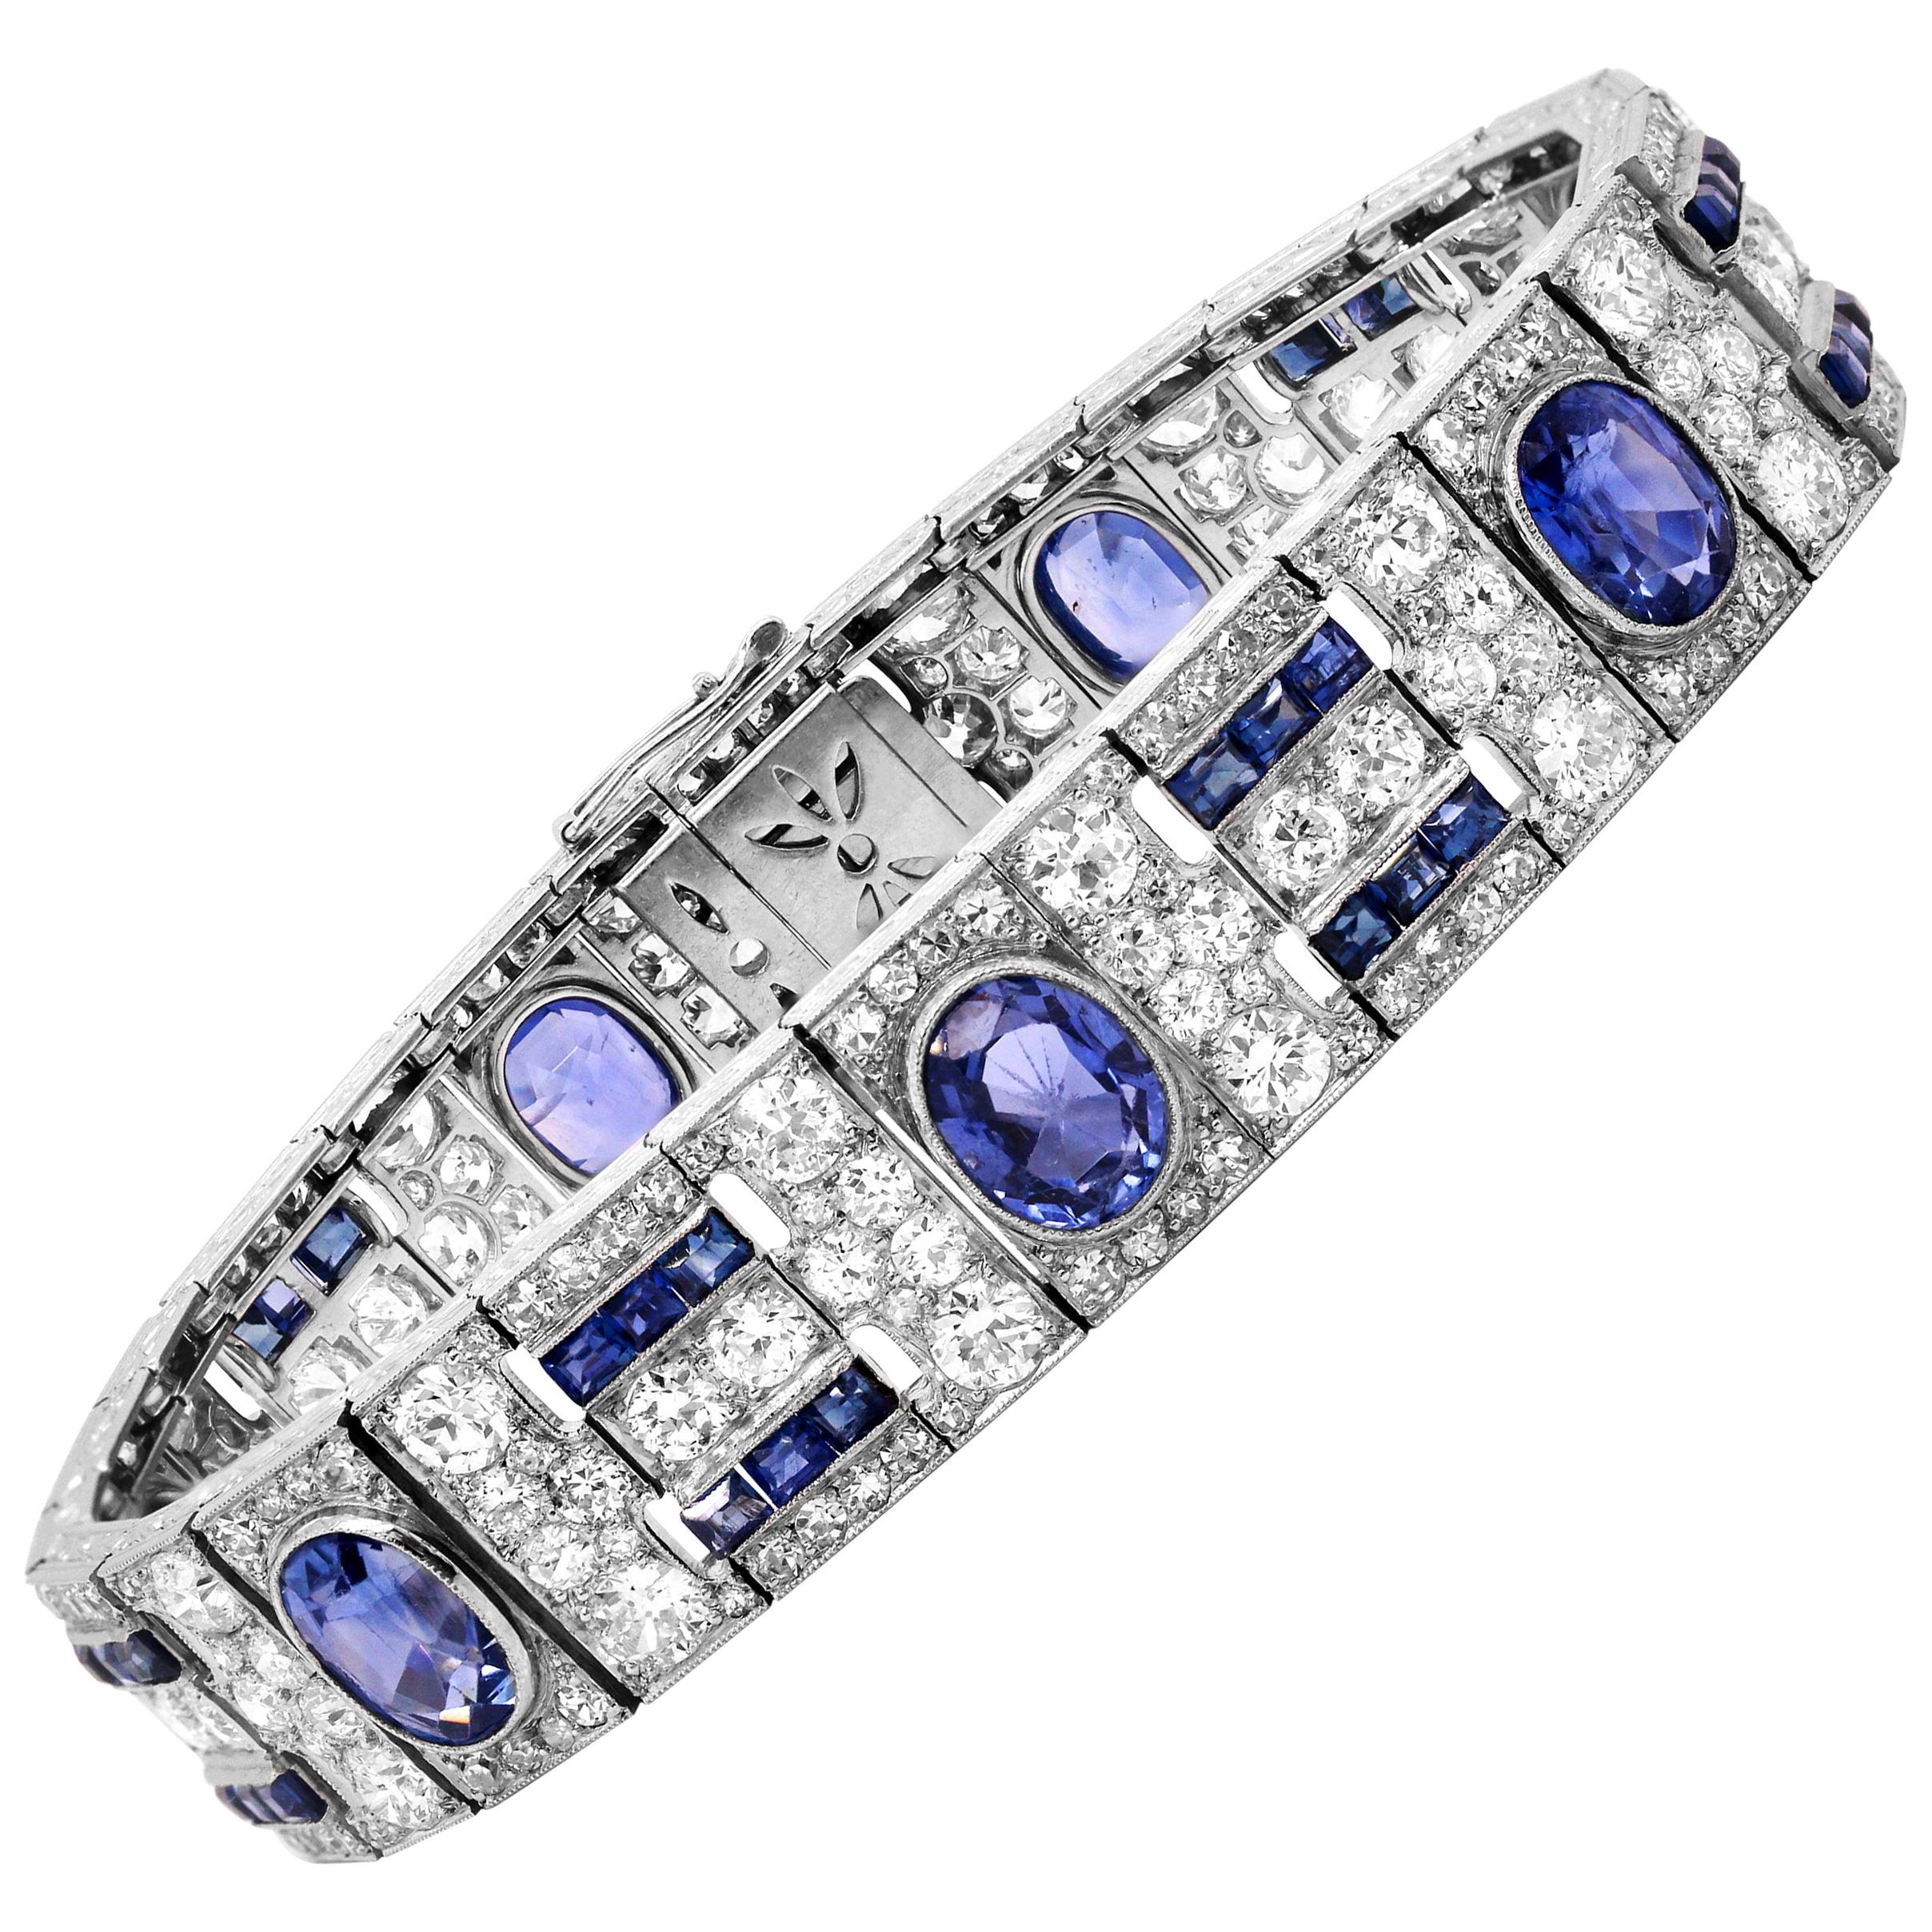 Oval and Princess Cut Blue Sapphires Diamonds 18 Karat Gold Bracelet